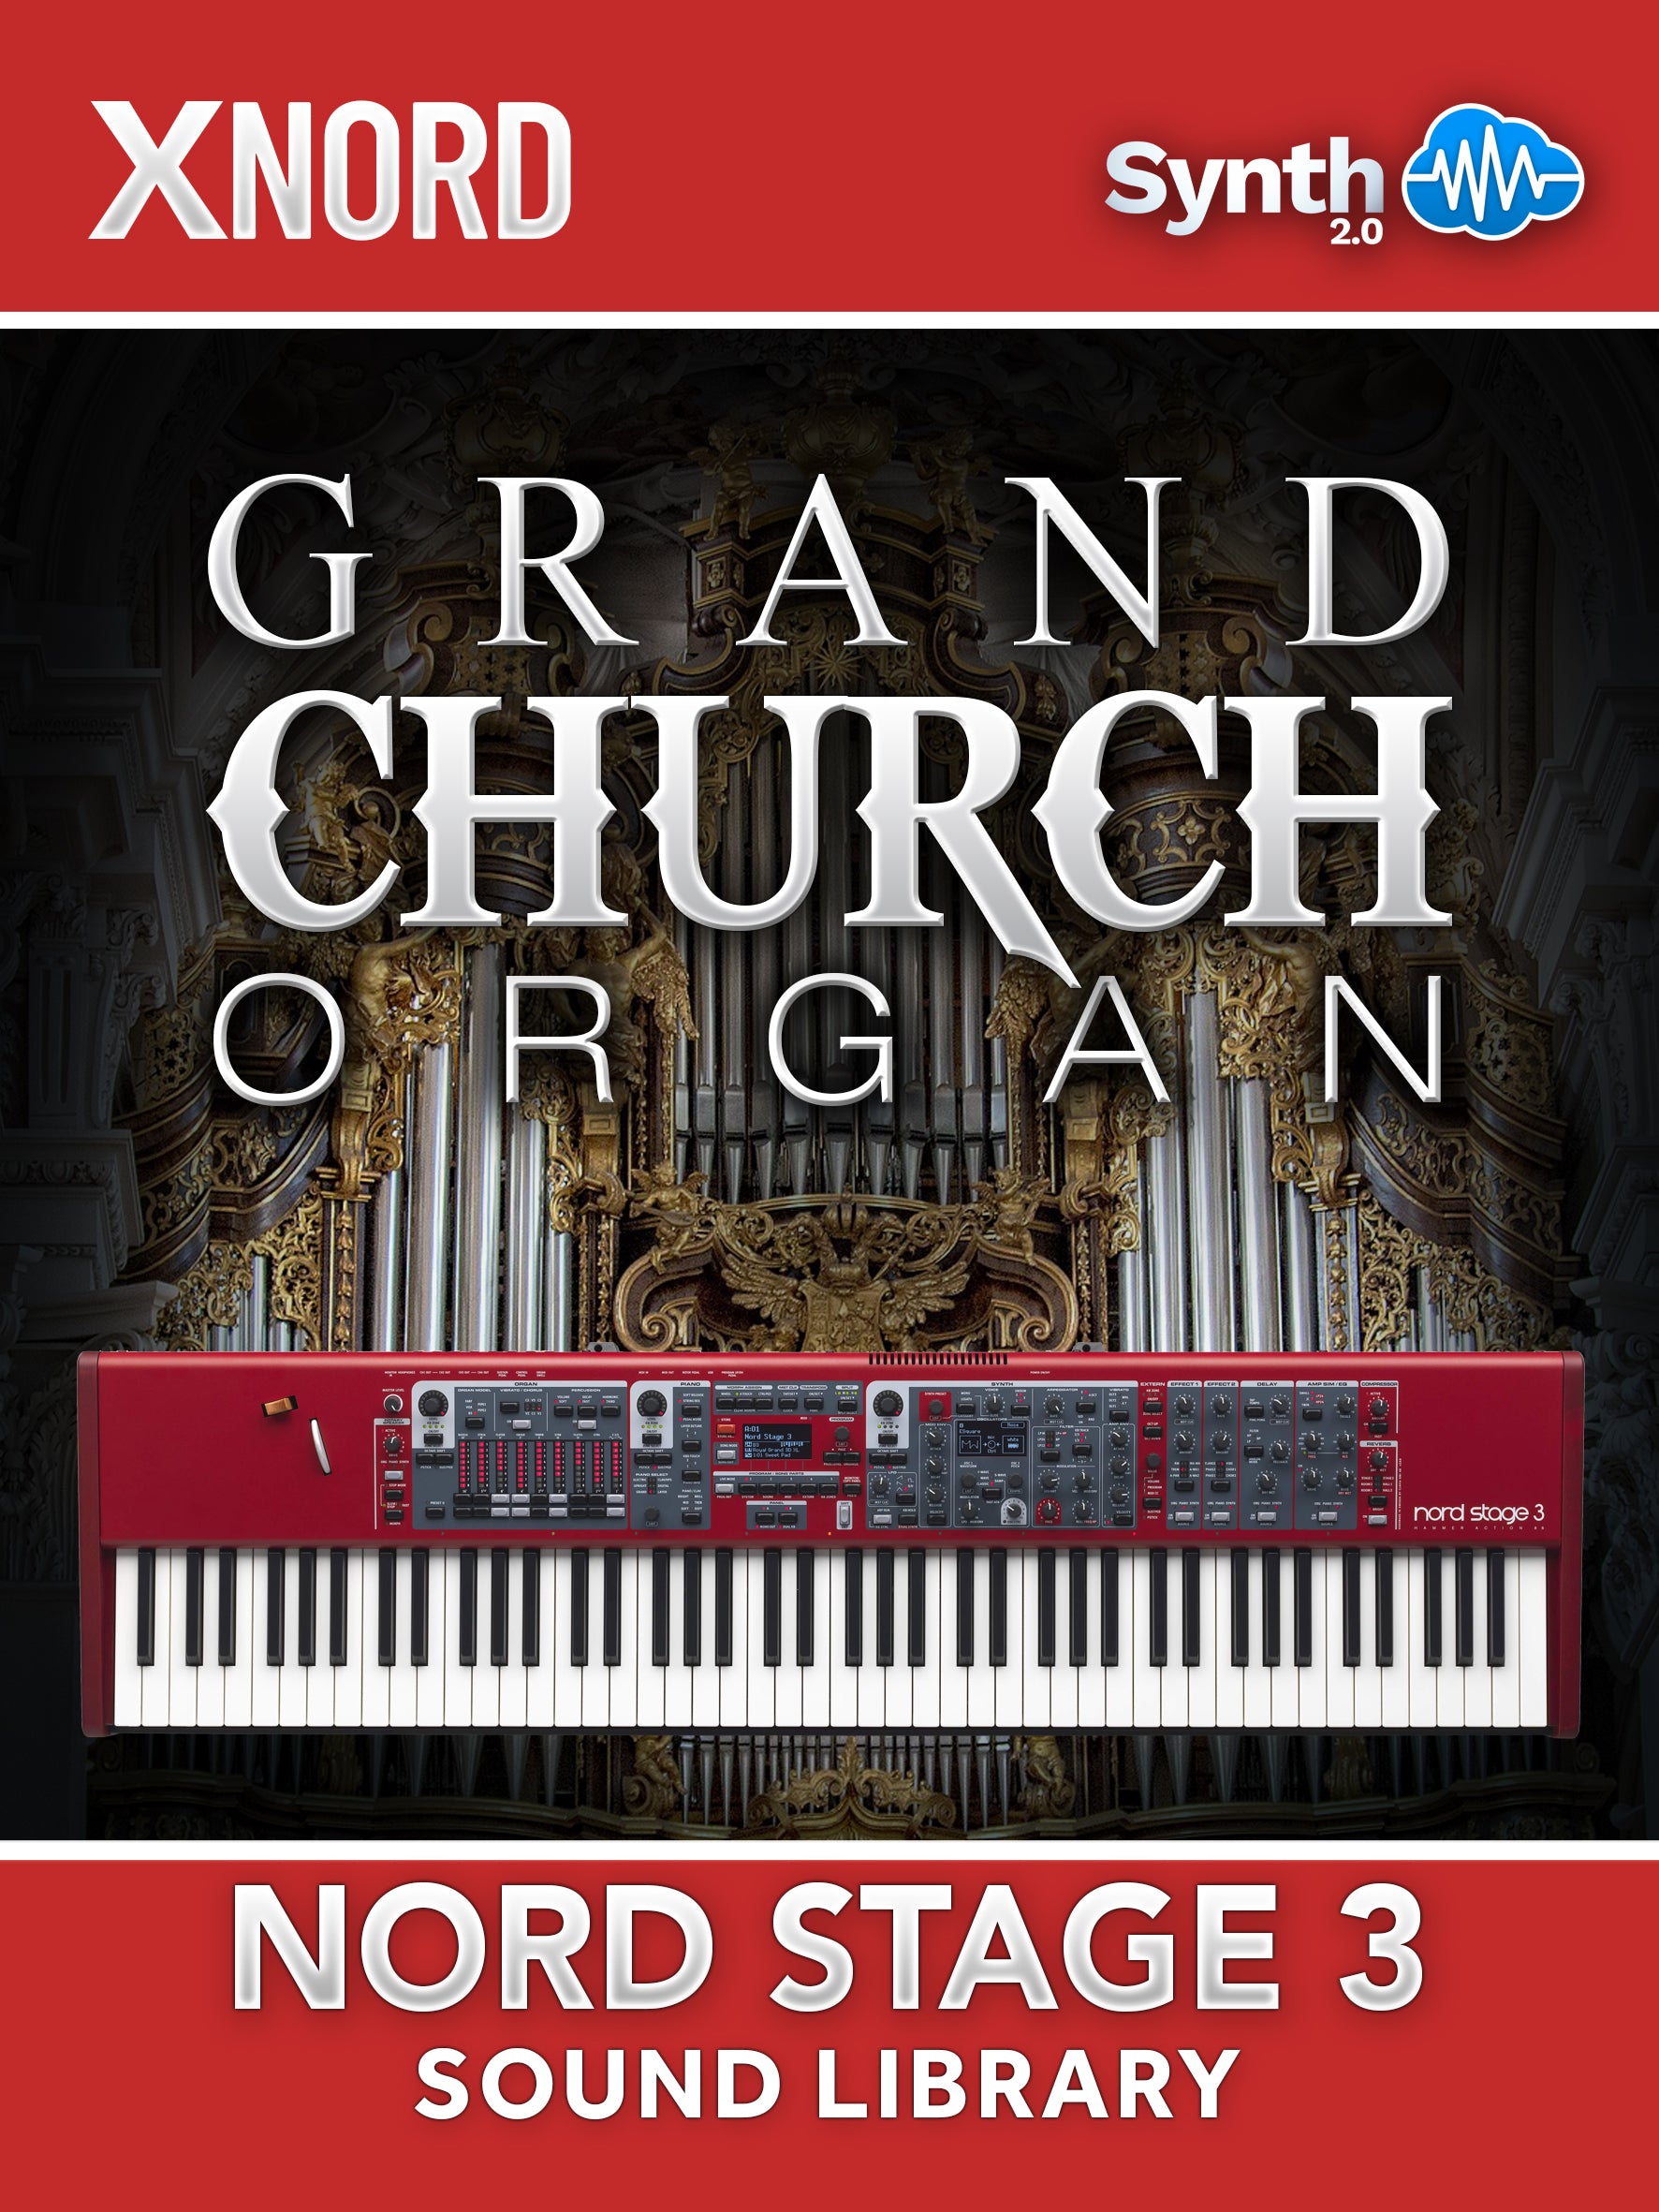 RCL015 - ( Bundle ) - Alessandria Organ + Grand Church Organ - Nord Stage 3